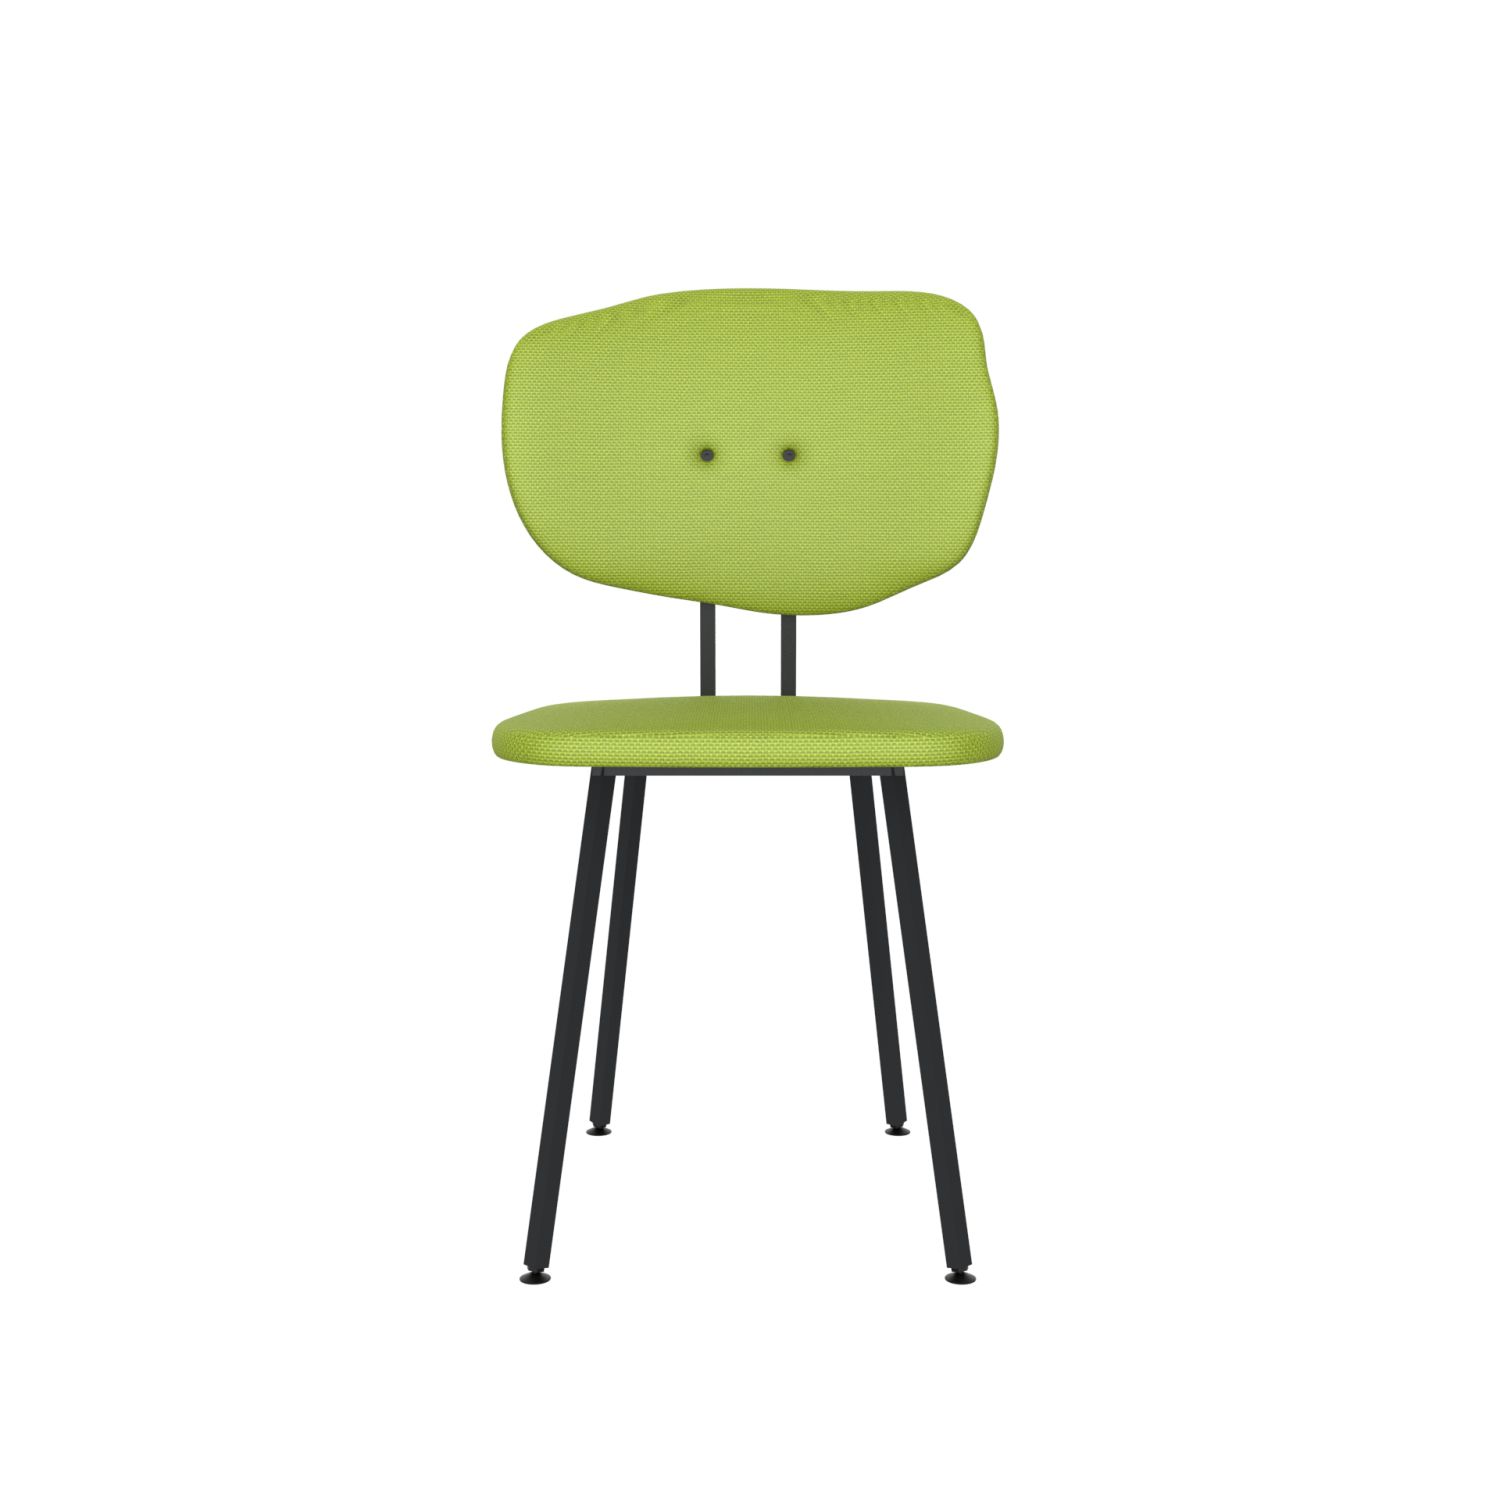 lensvelt maarten baas chair 101 not stackable without armrests backrest f fairway green 020 black ral9005 hard leg ends